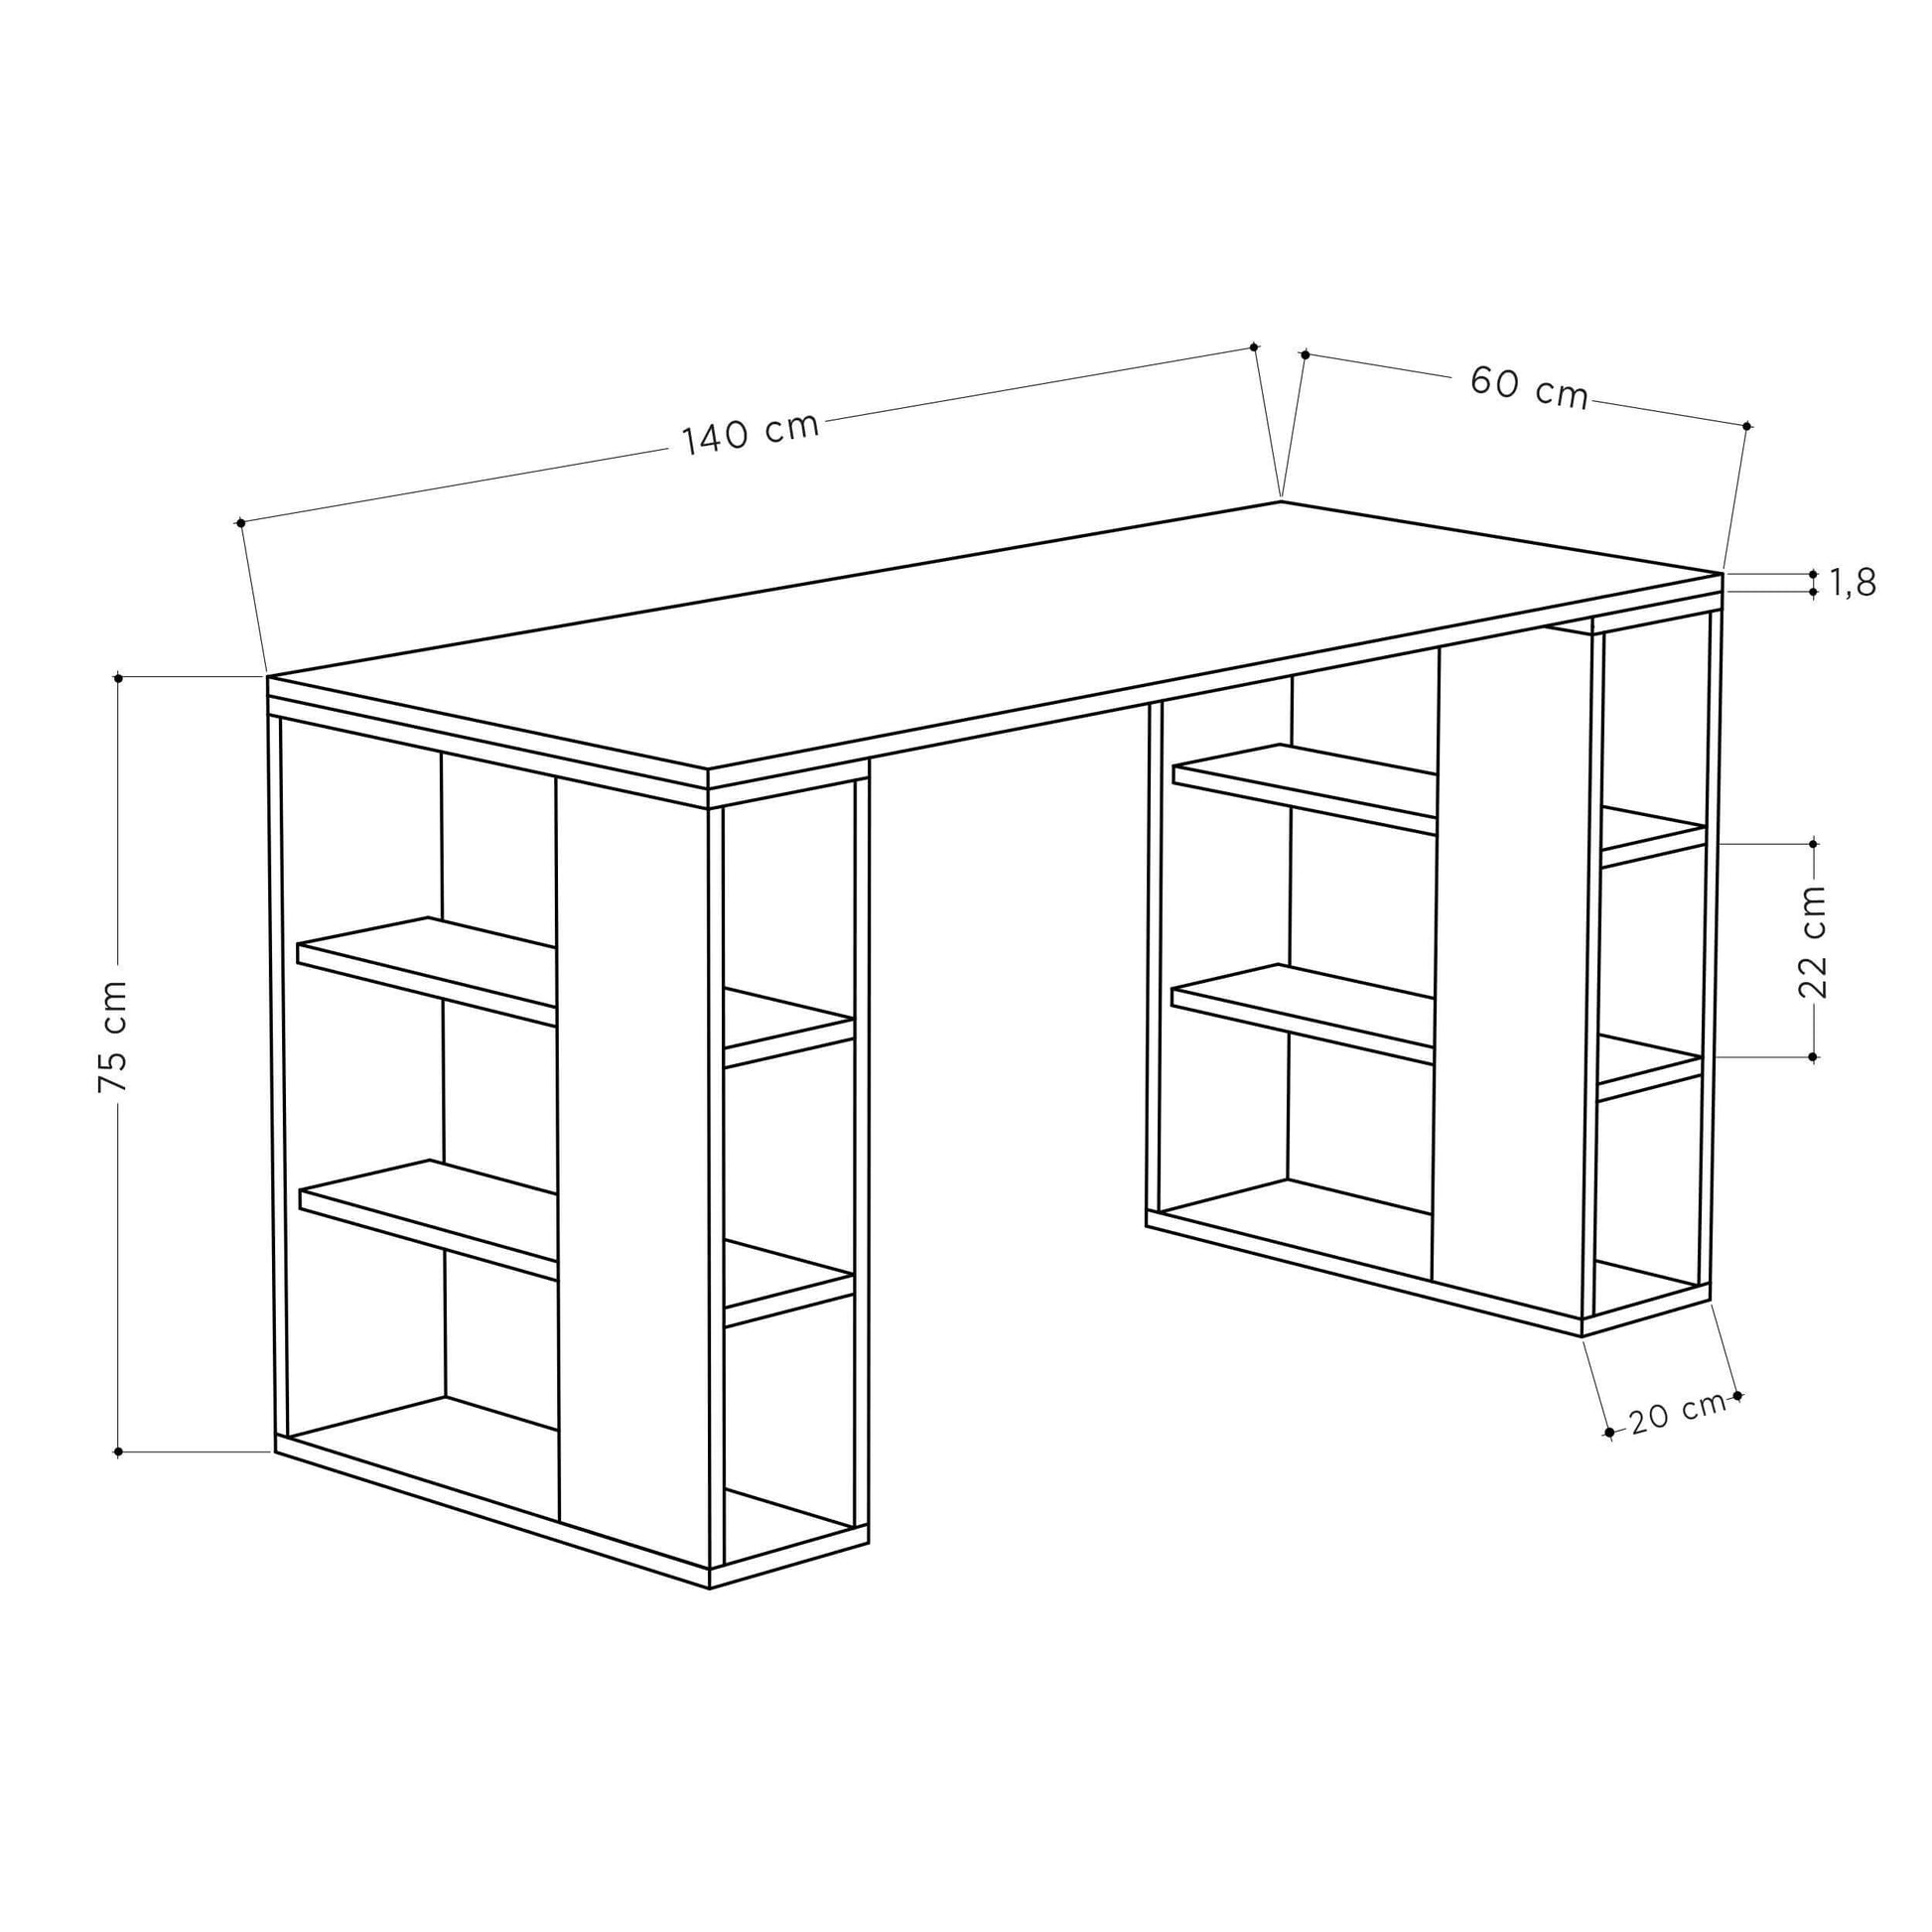 Colmar Modern Desk With Bookshelf Legs Width 140cm - Decortie